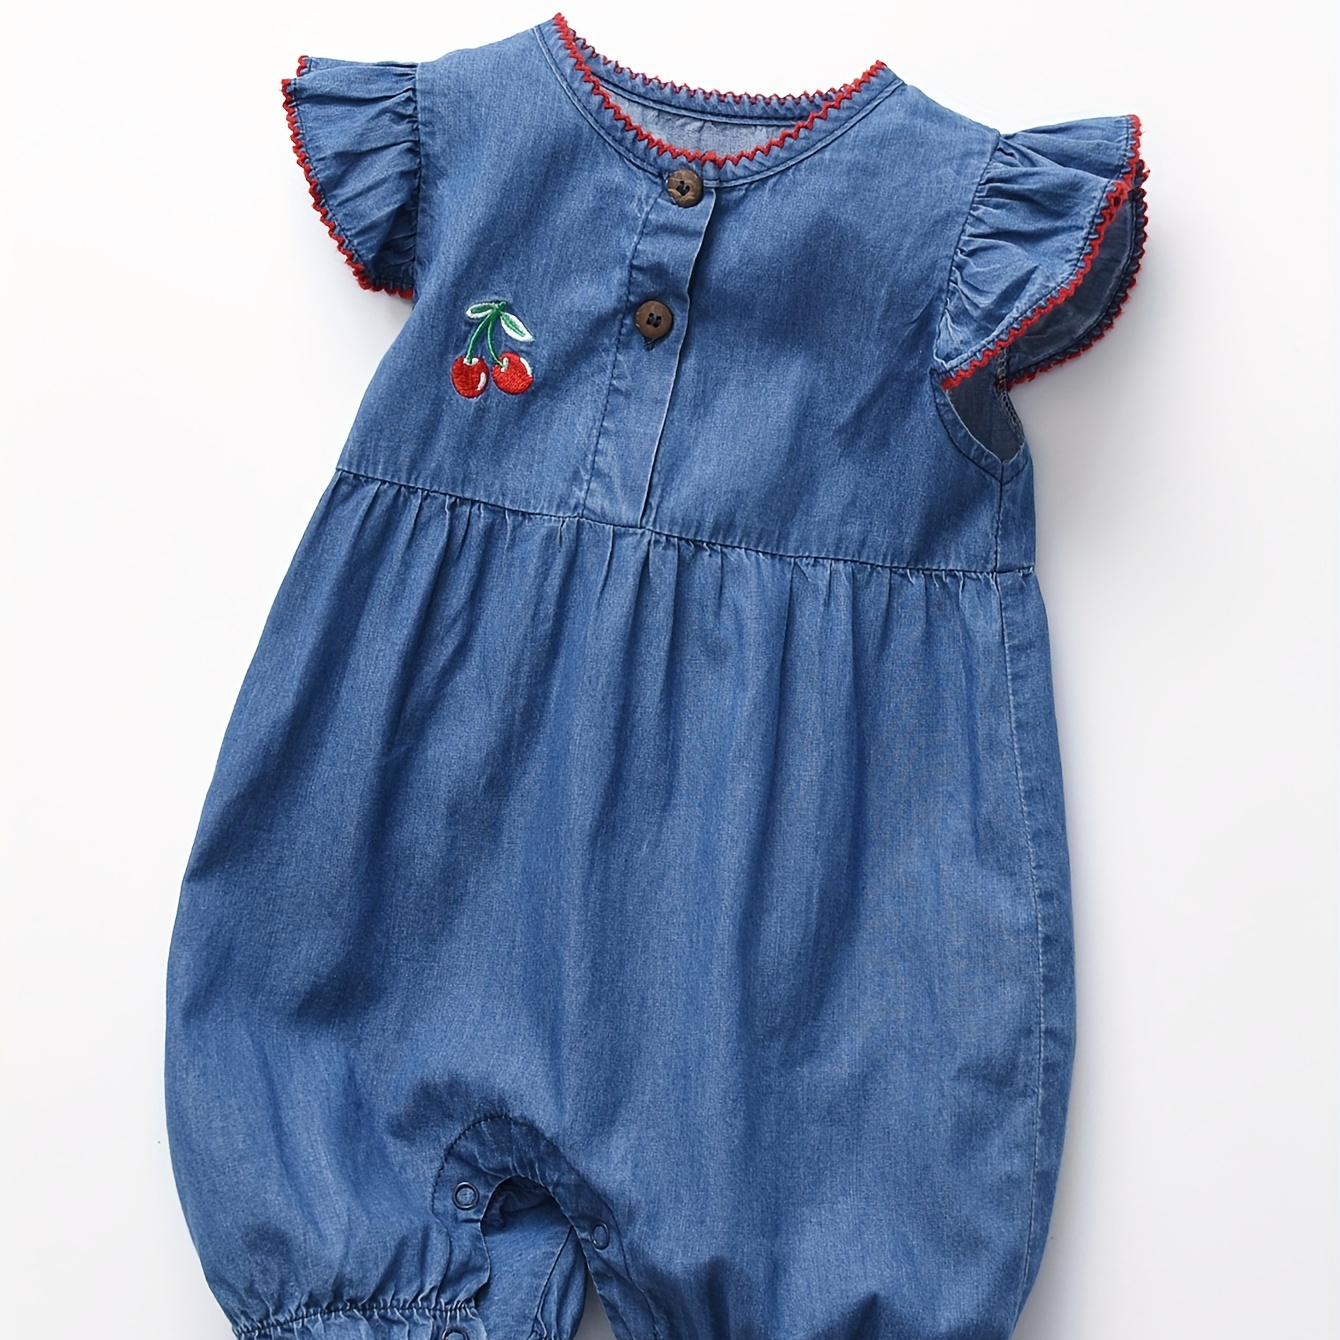 

Baby's Lovely Cherry Embroidered Denim Bodysuit, Casual Cotton Cap Sleeve Romper, Toddler & Infant Girl's Onesie, As Gift